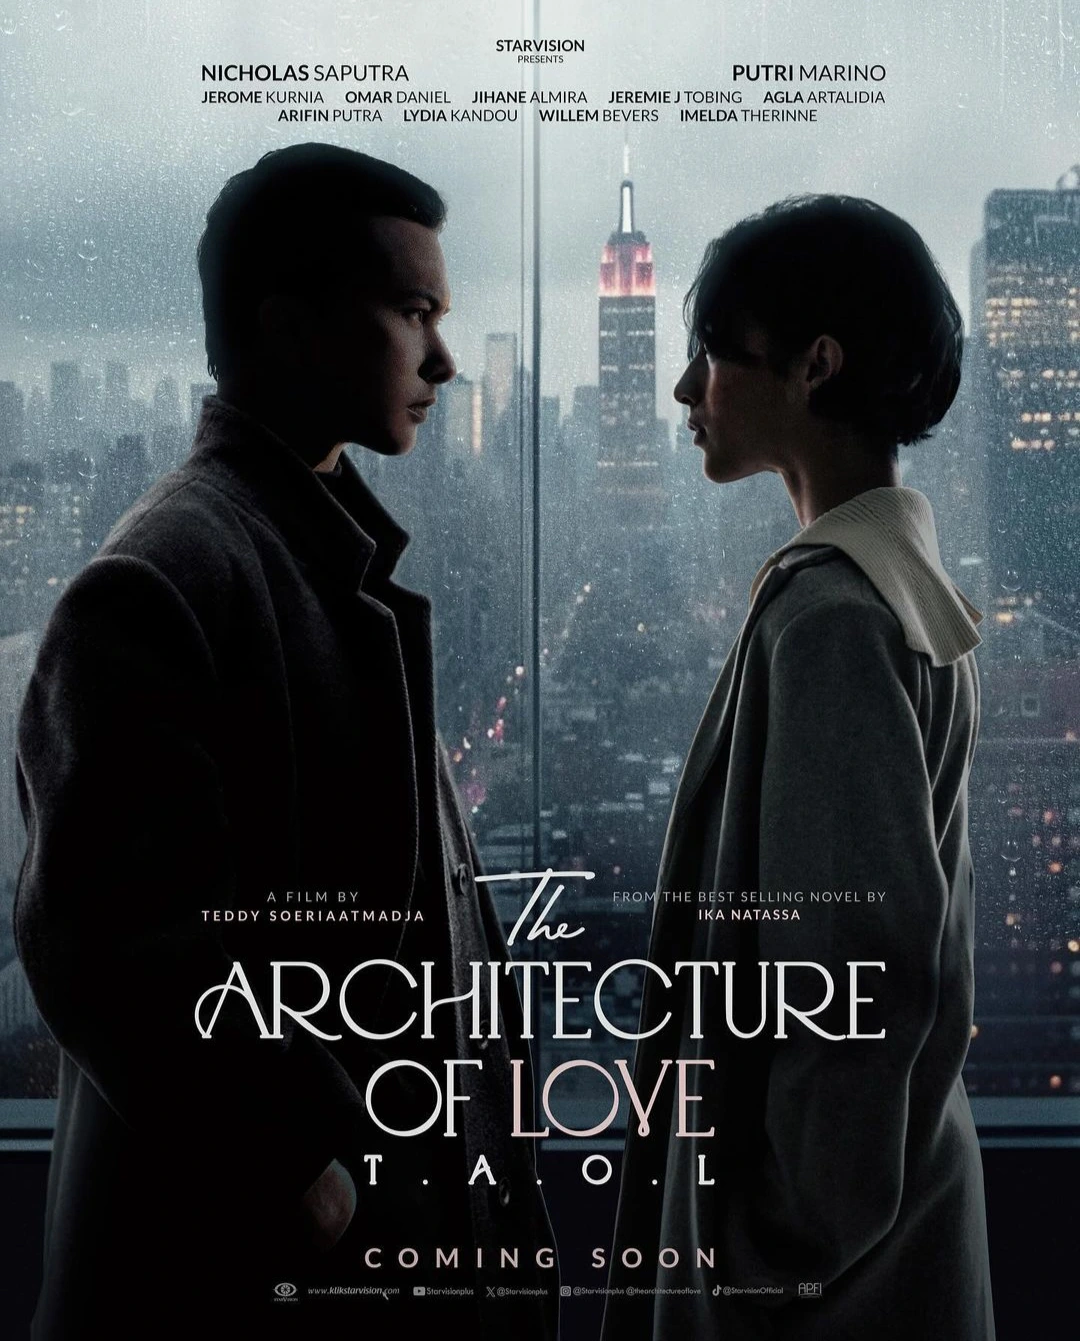 Sinopsis The Architecture of Love, Pertemuan Cinta!